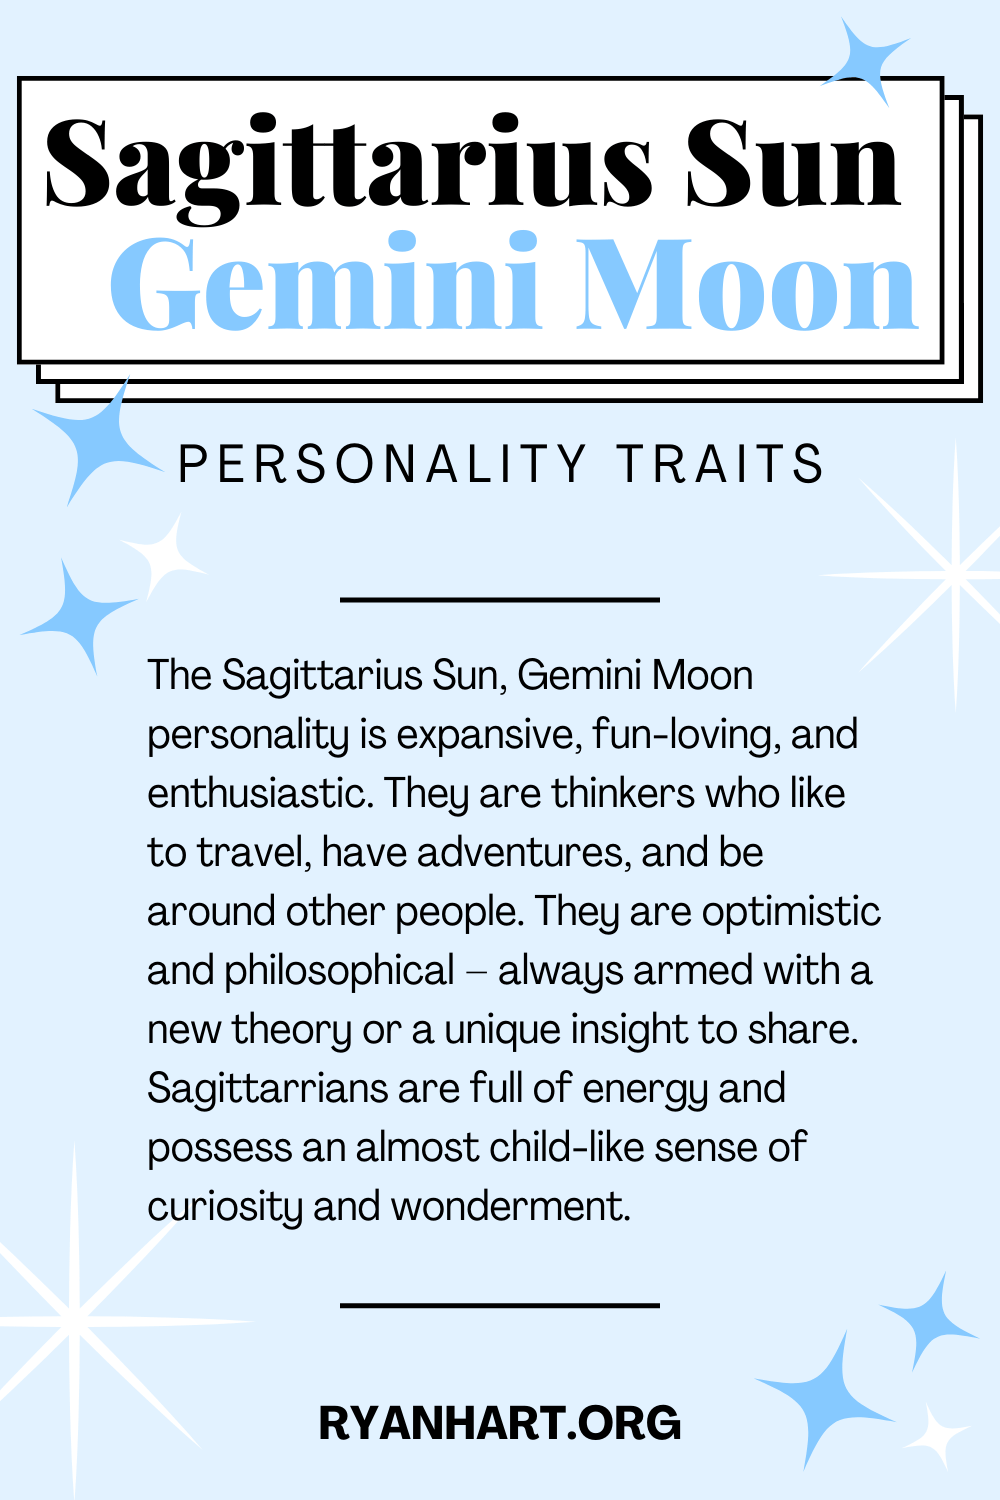 Sagittarius Sun Gemini Moon Description